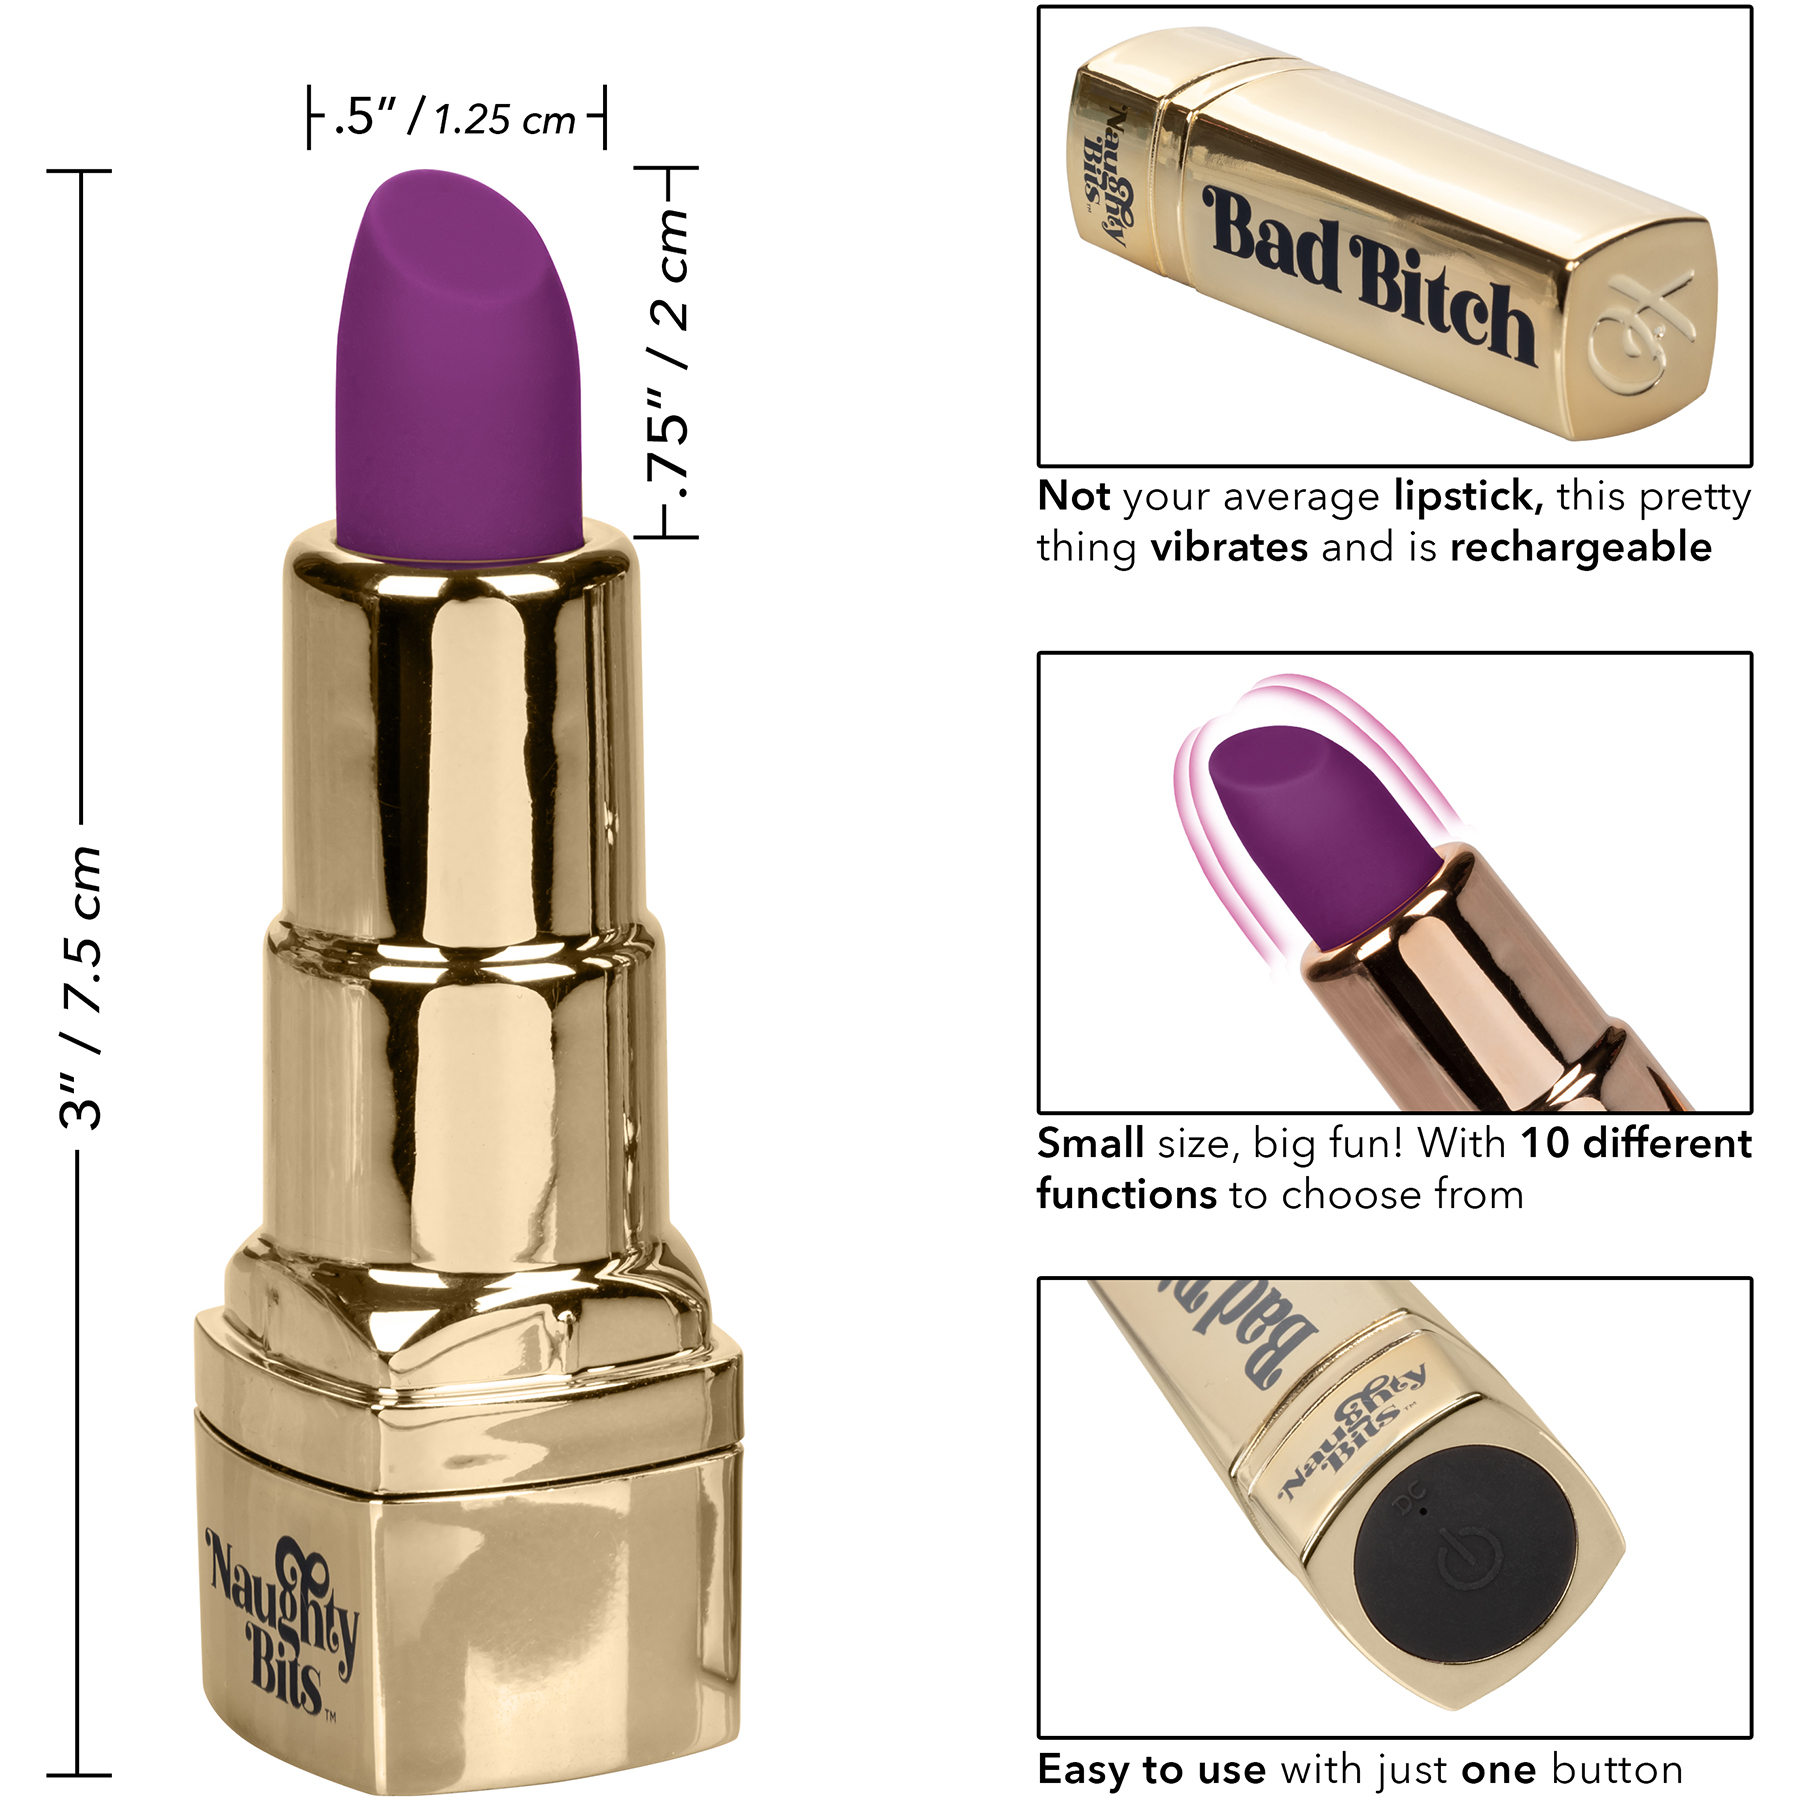 Naughty Bits Bad Bitch Waterproof Rechargeable Lipstick Vibrator - Measurements